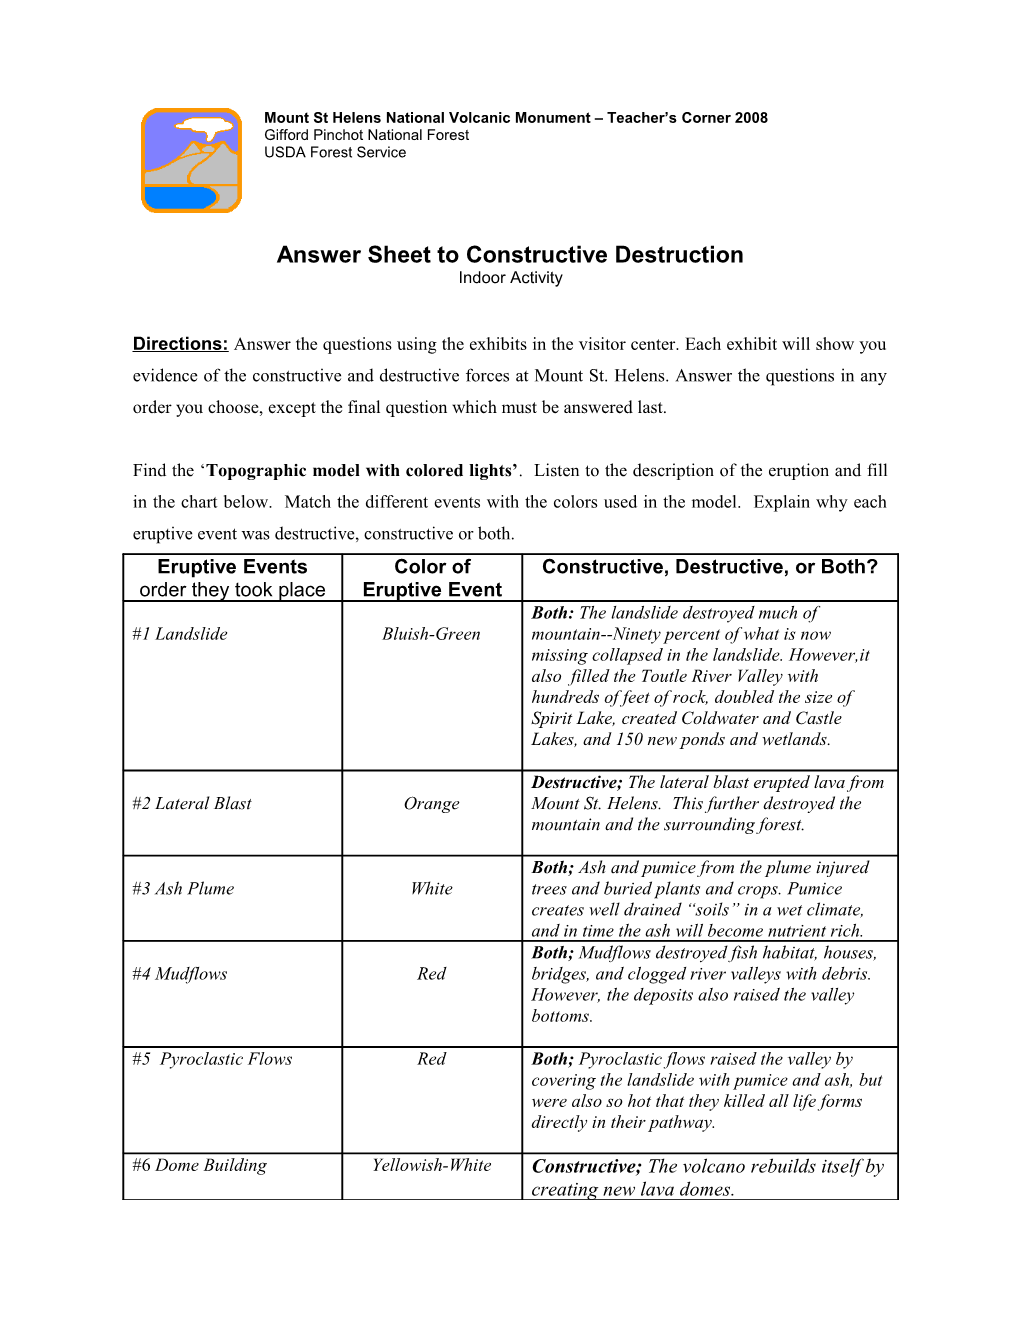 Answer Sheet to Constructive Destruction